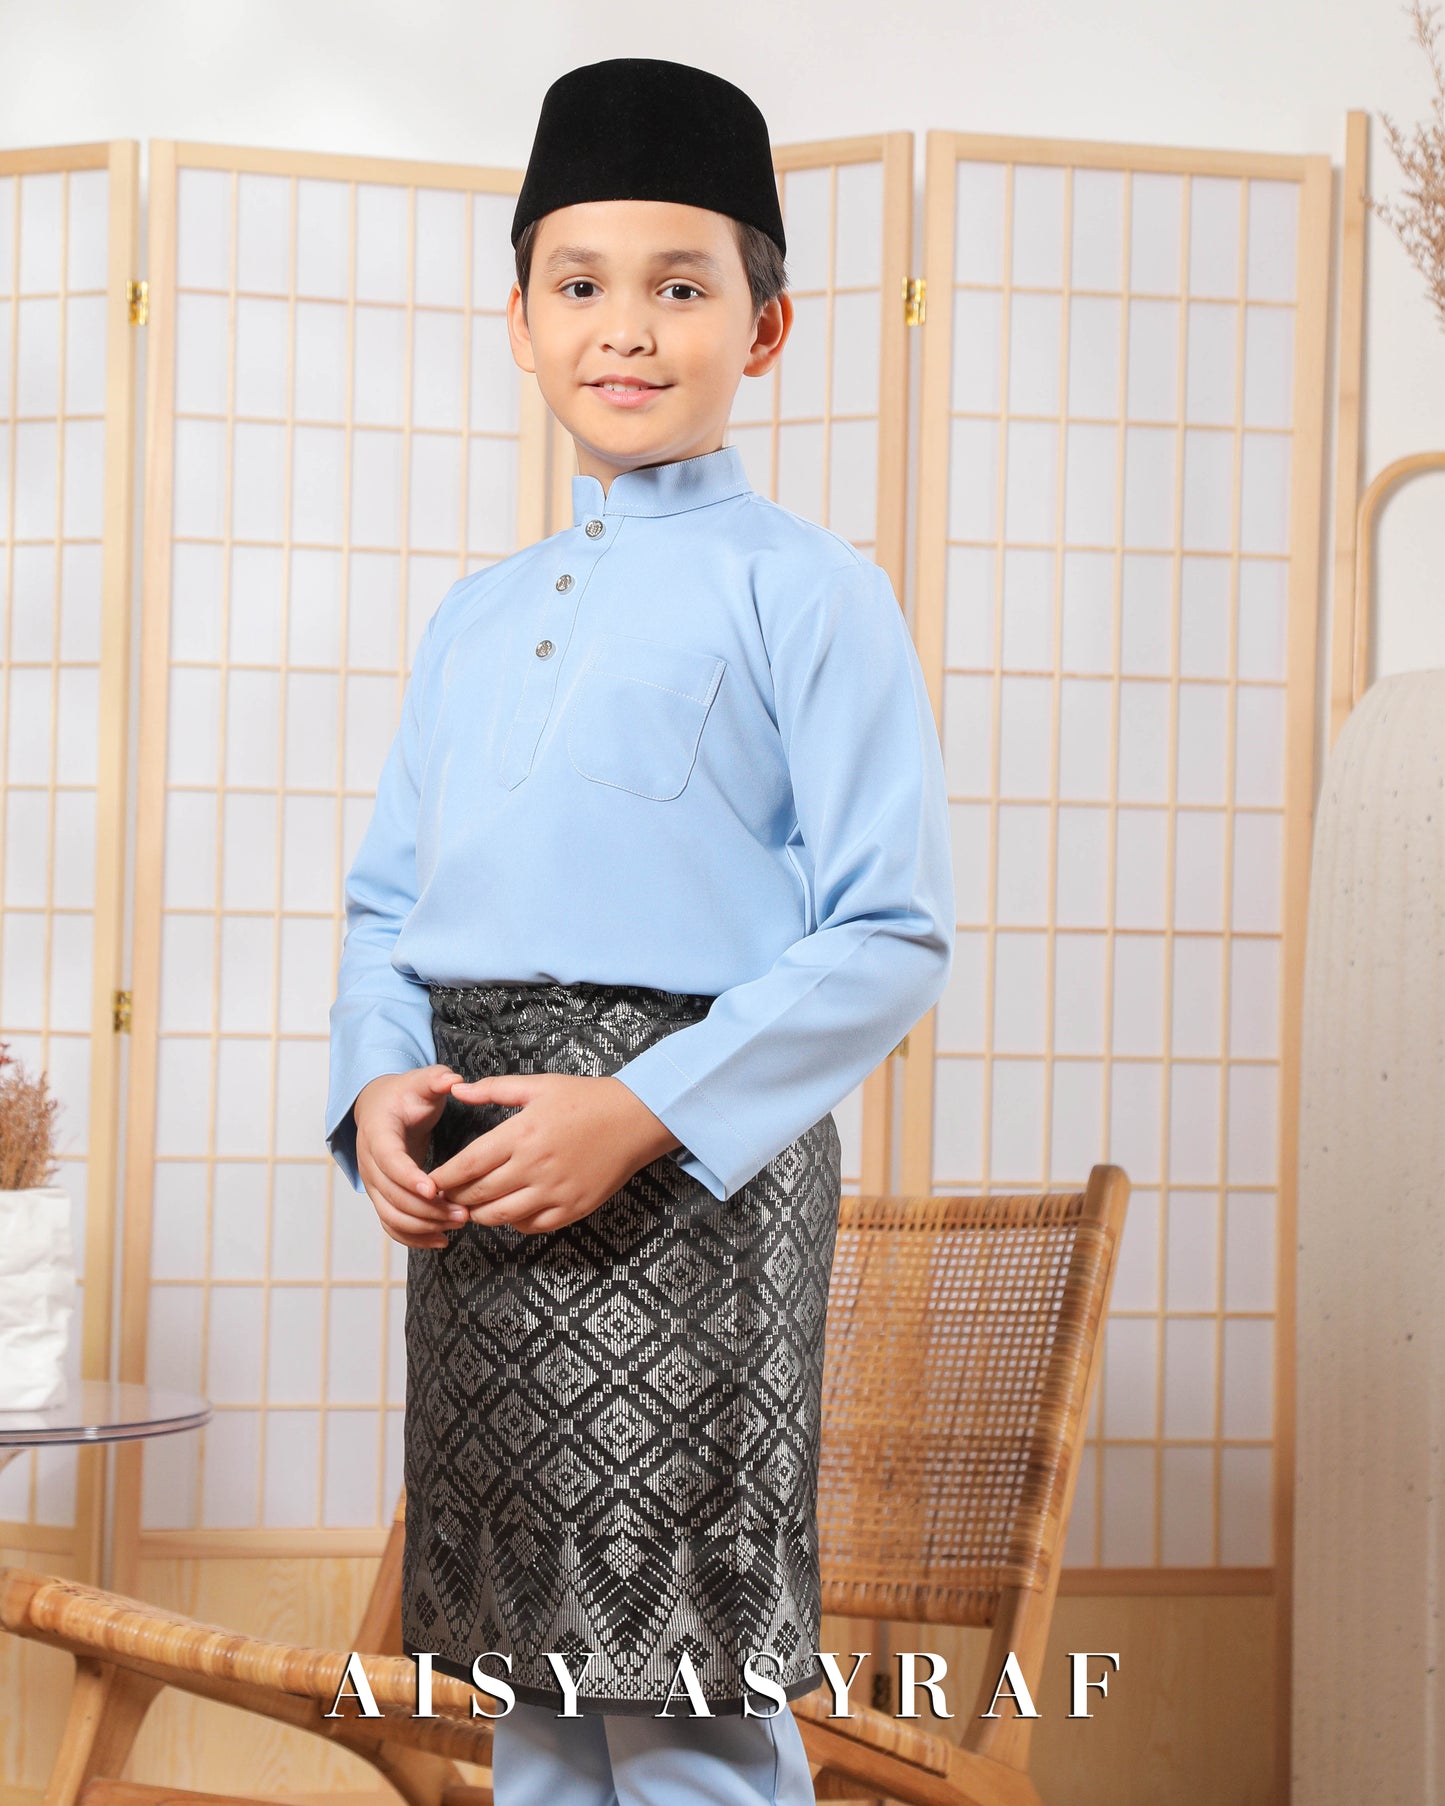 Baju Melayu Zaidan Kids - Cinderella Blue